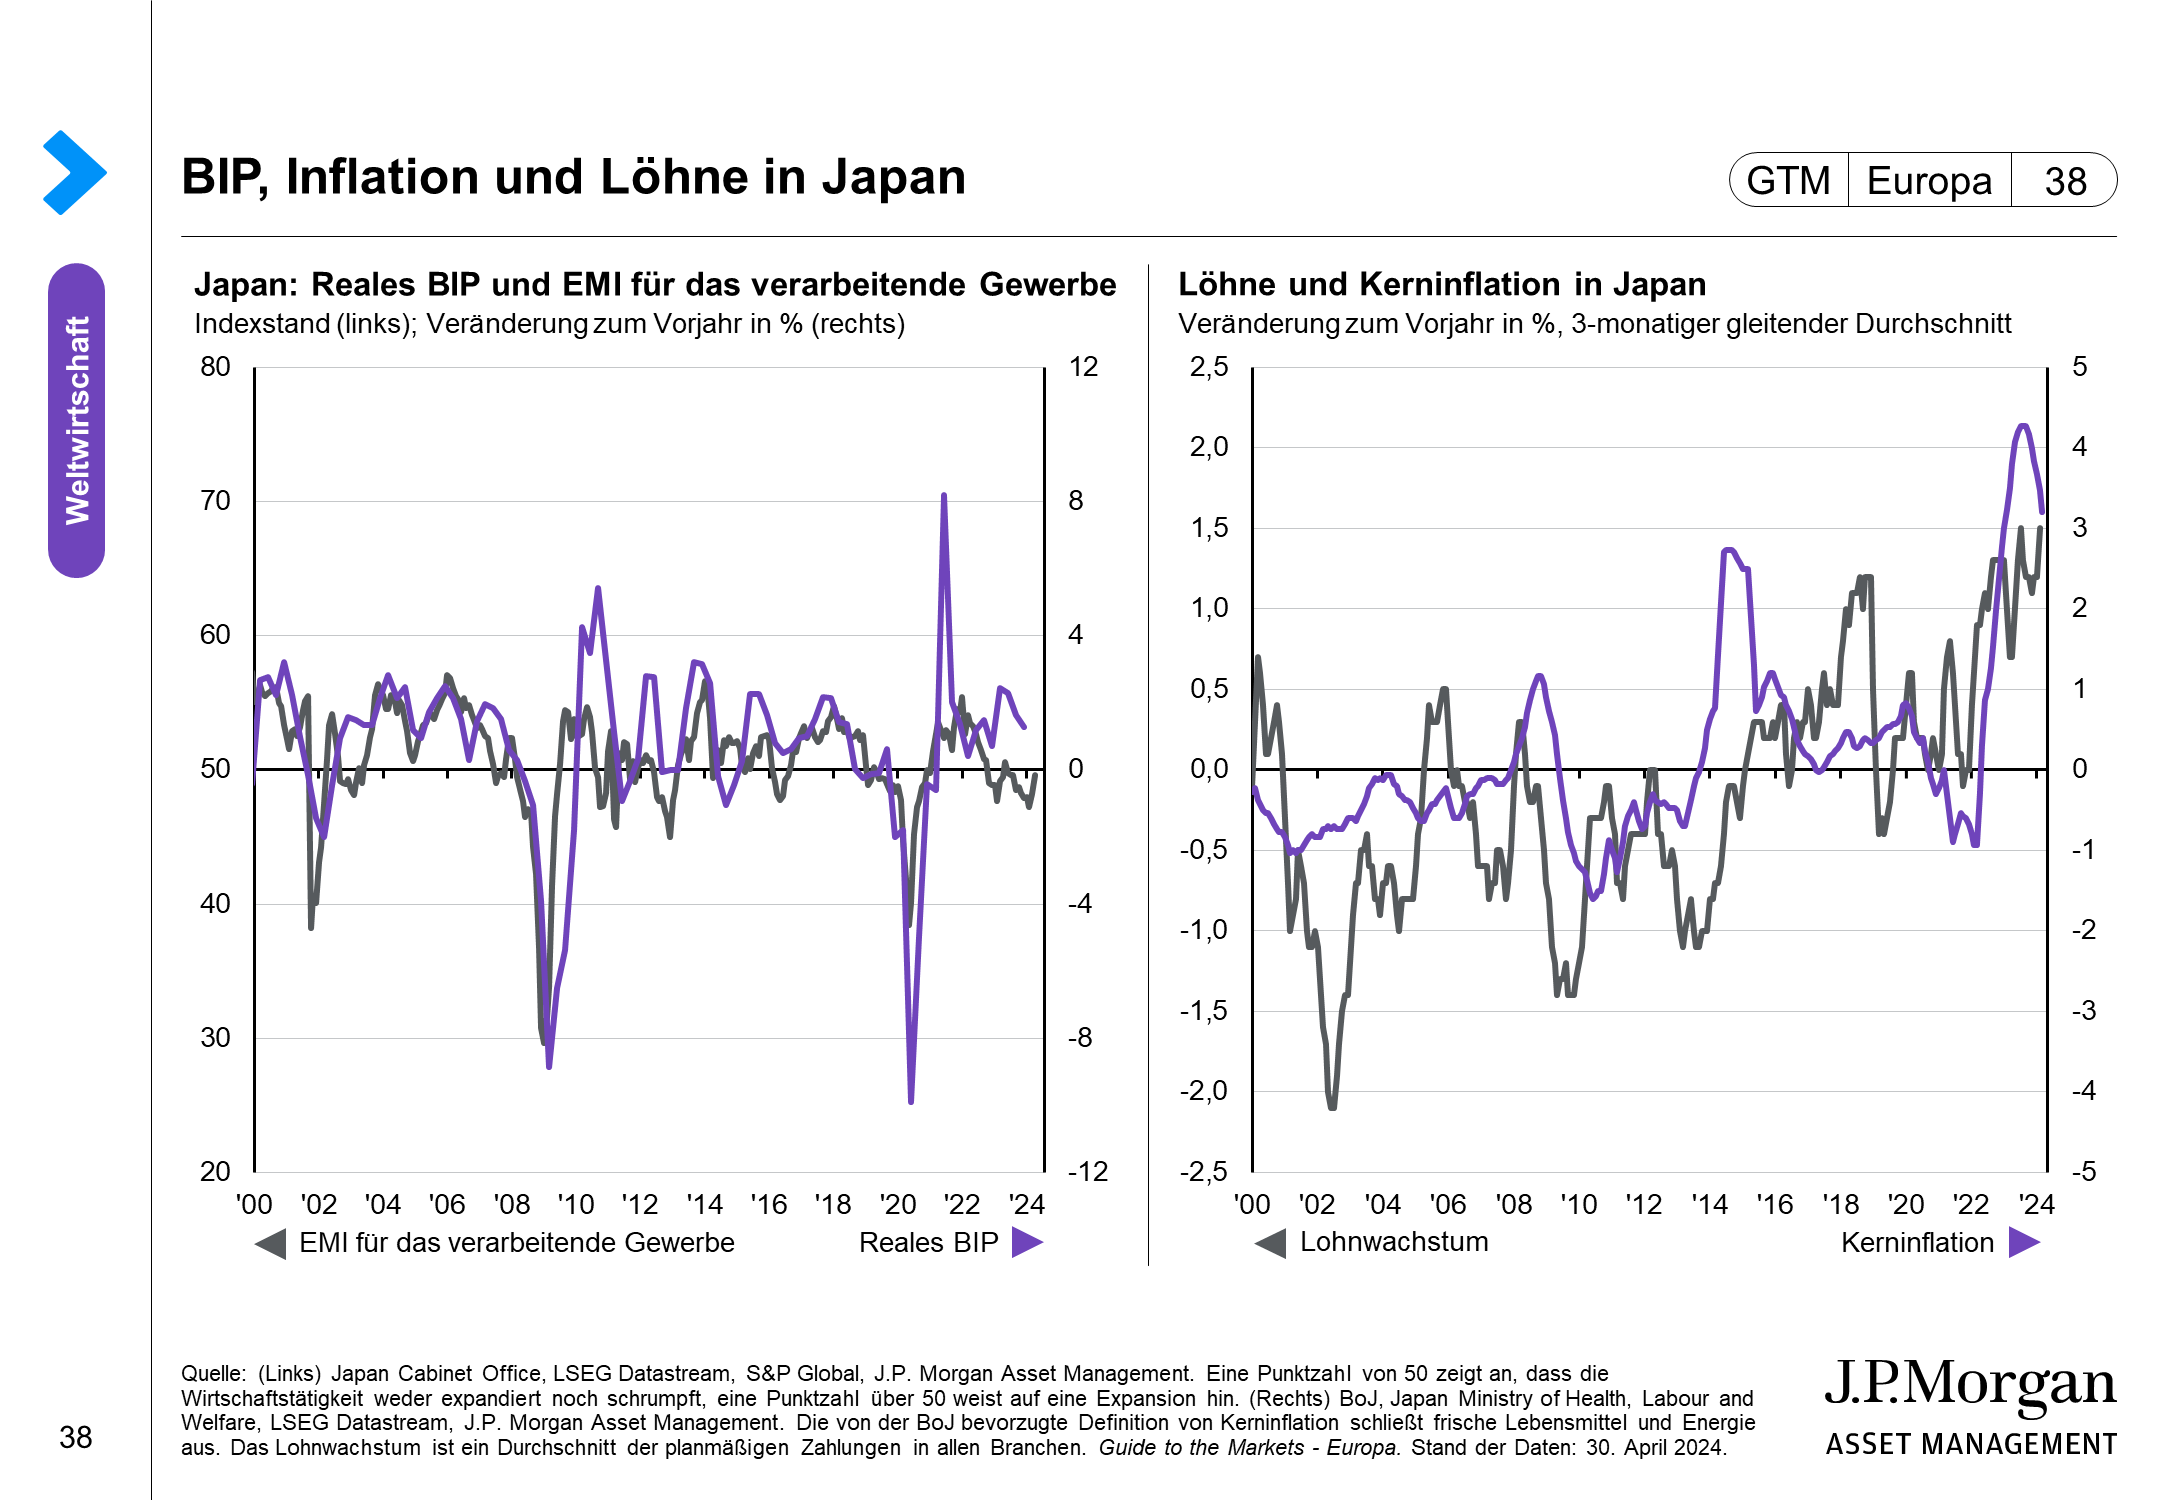 Das Bruttoinlandsprodukt (BIP) in Japan